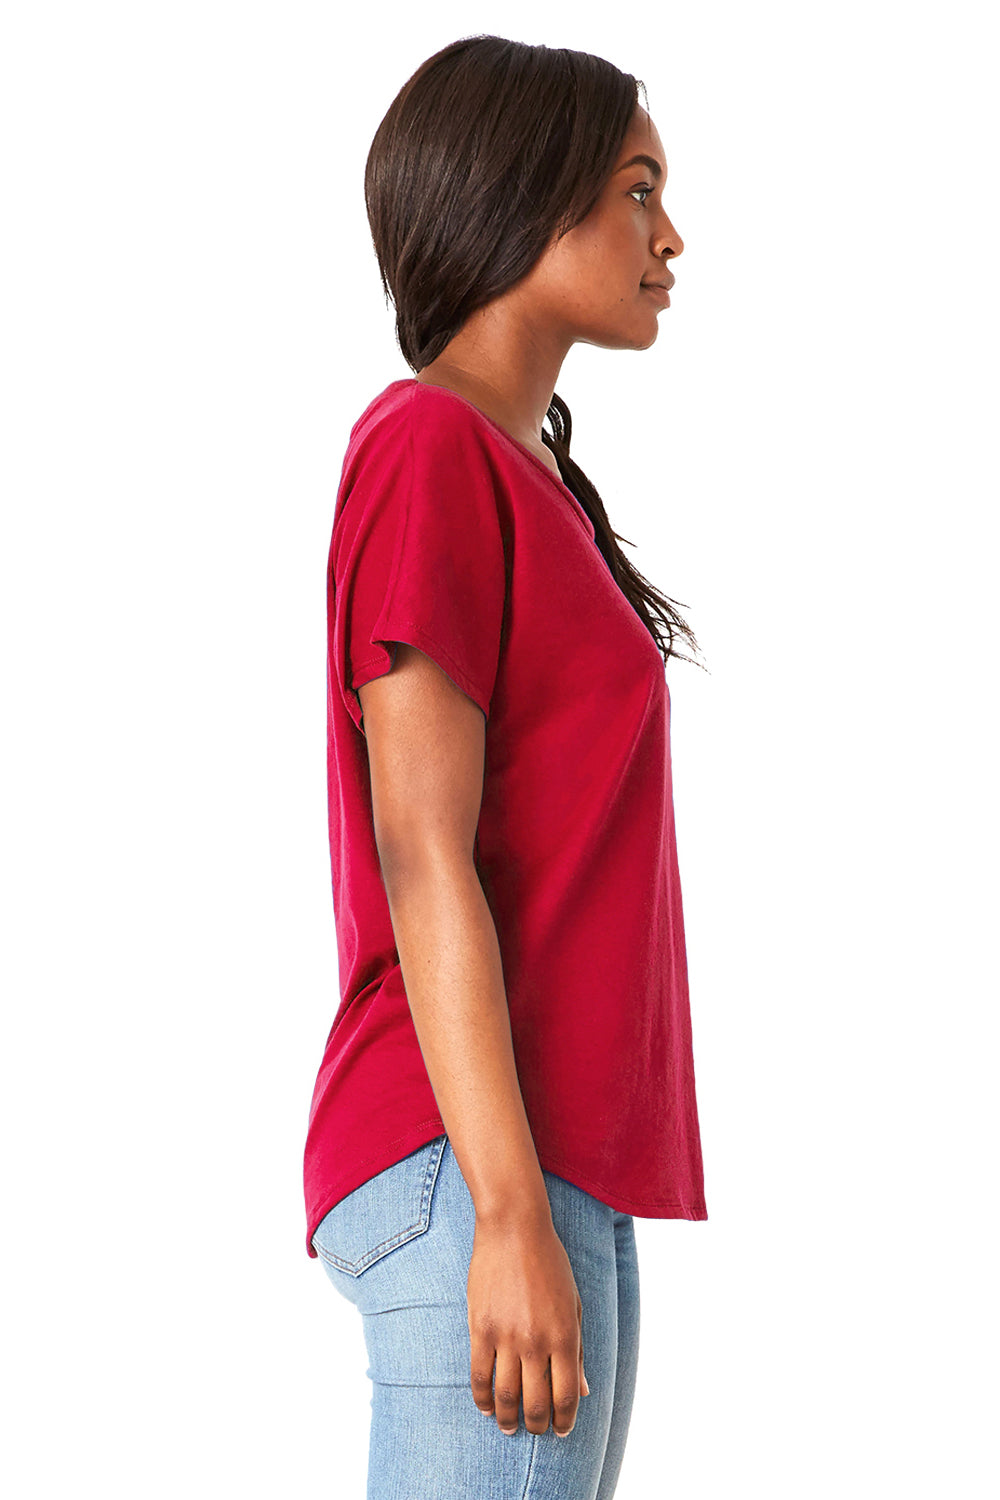 Next Level 1560 Womens Ideal Dolman Short Sleeve Crewneck T-Shirt Red Side